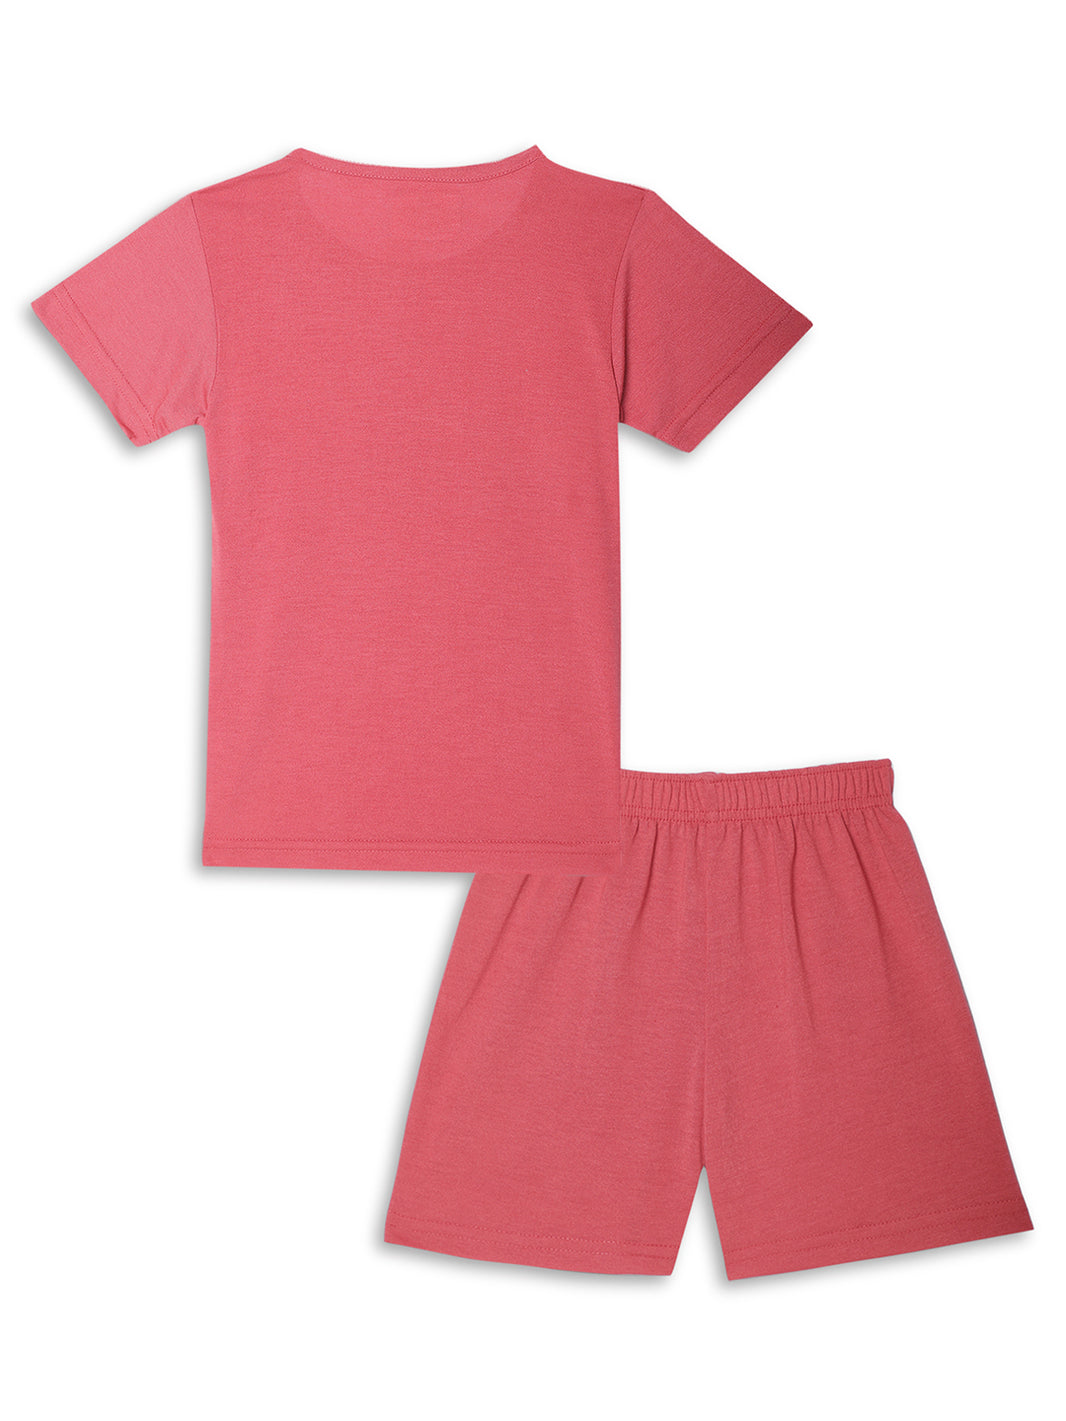 Vimal Jonney Printed Pink Regular Fit Cotton blended Tshirt And Bottom Set For Kids